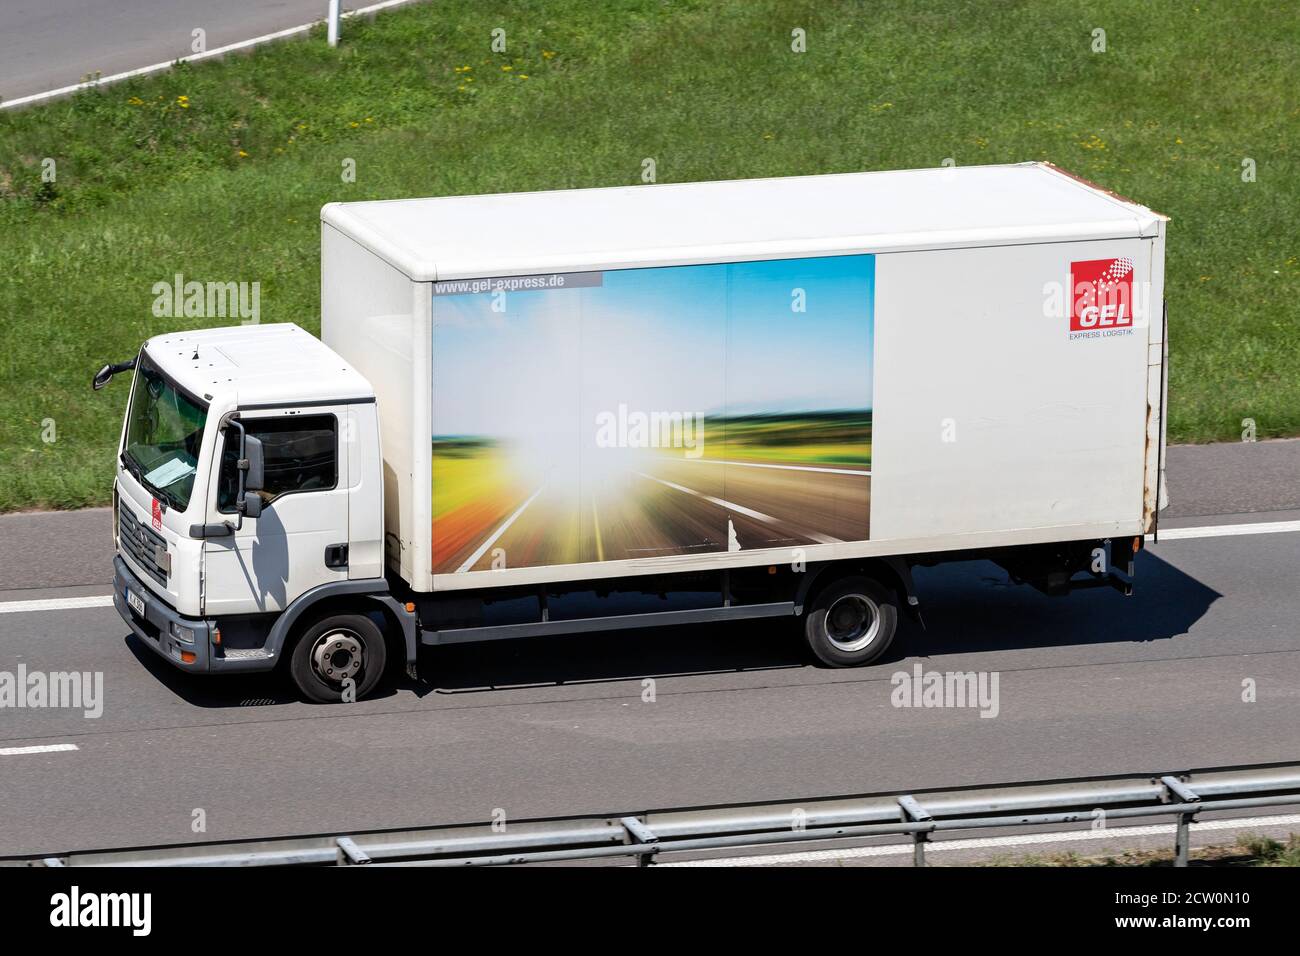 GEL MAN truck on motorway. Stock Photo